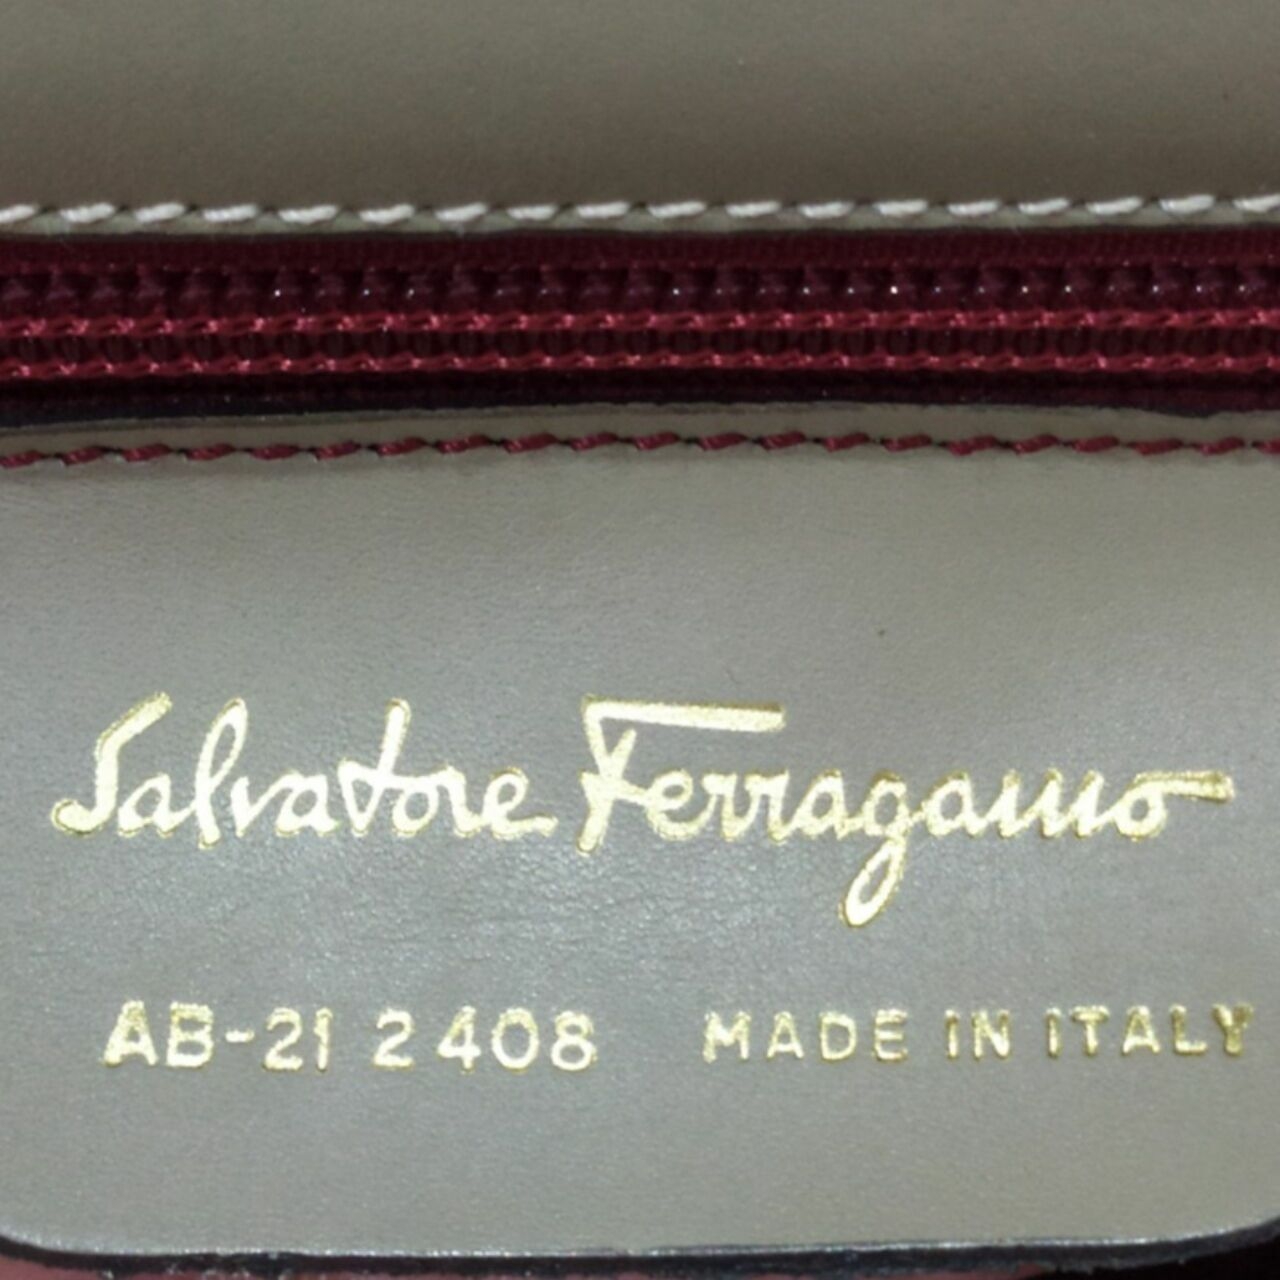 Salvatore Ferragamo Khaki Handbag AB-21 2 408